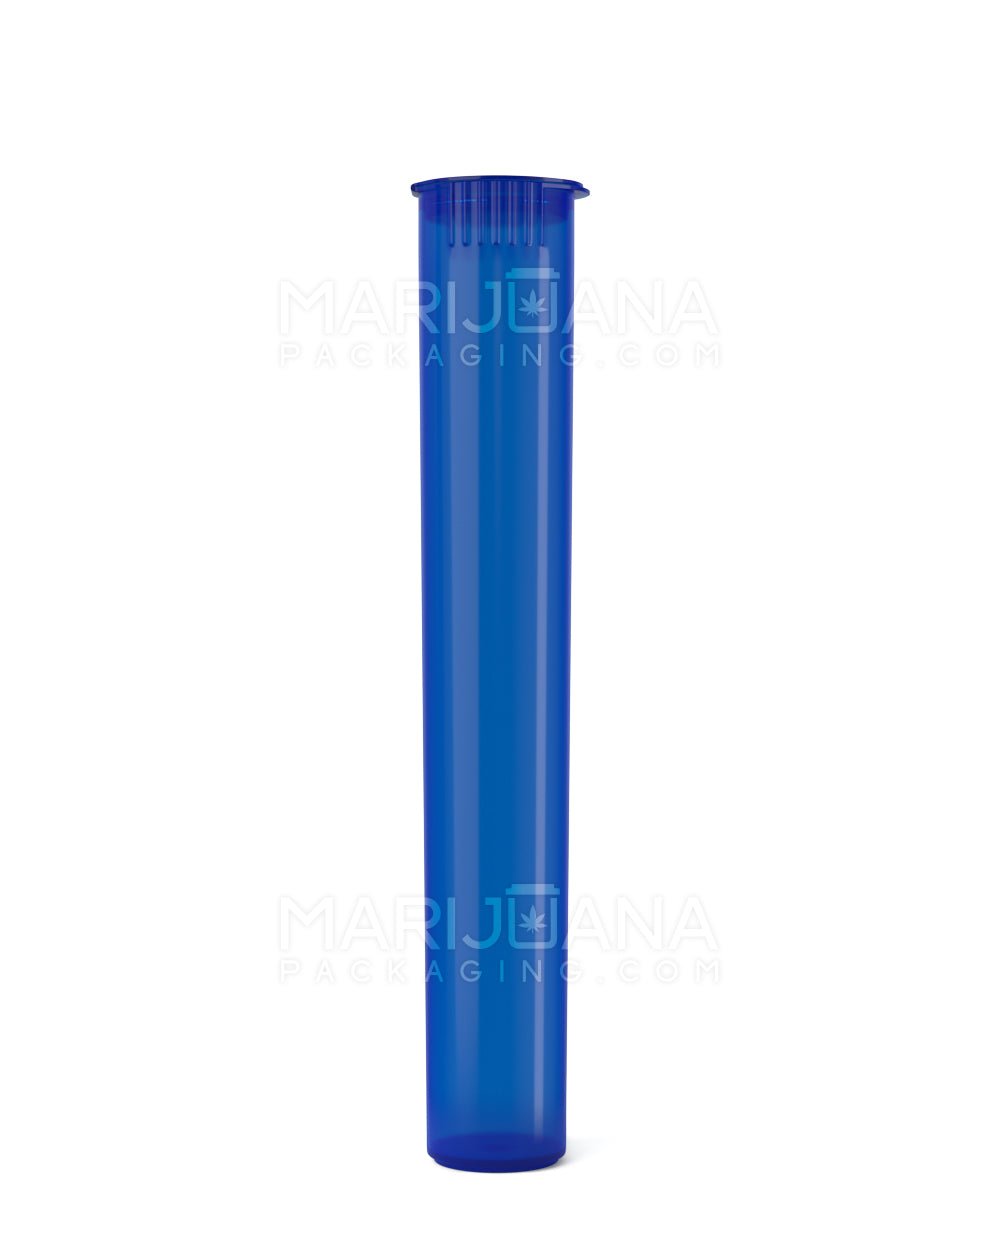 Child Resistant | King Size Pop Top Translucent Plastic Pre-Roll Tubes | 116mm - Blue - 1000 Count - 2